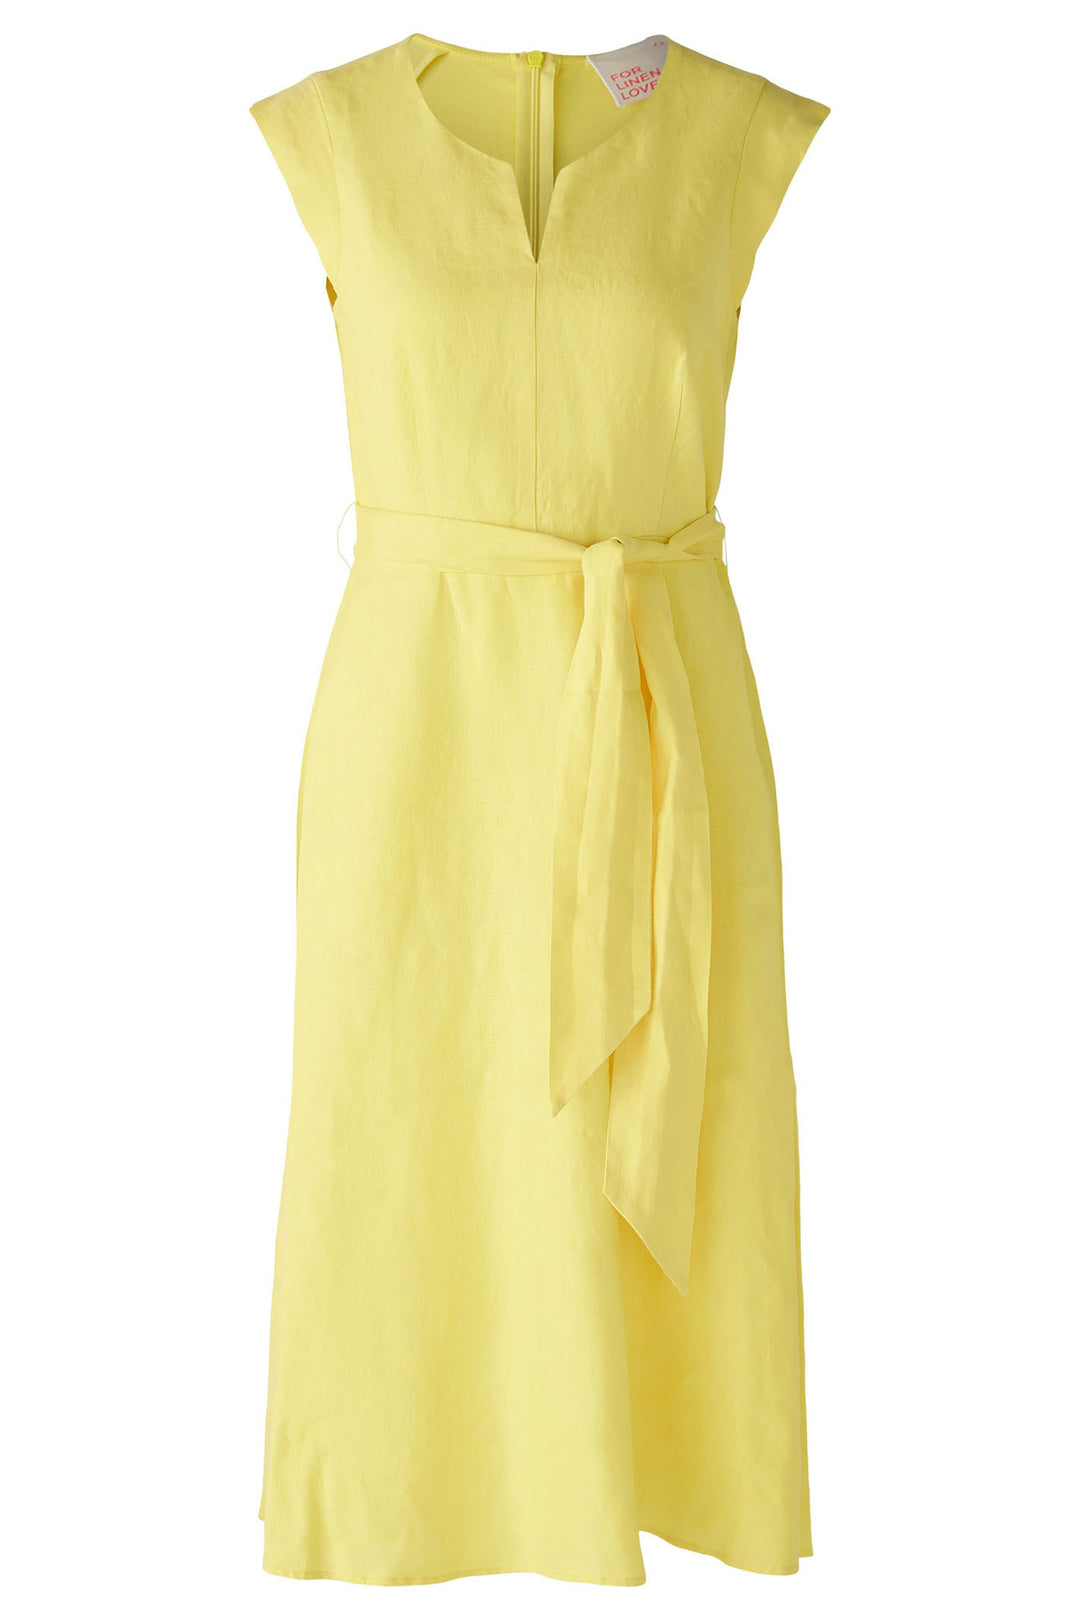 Oui 87553 Yellow Cap Sleeve Linen Dress - Olivia Grace Fashion